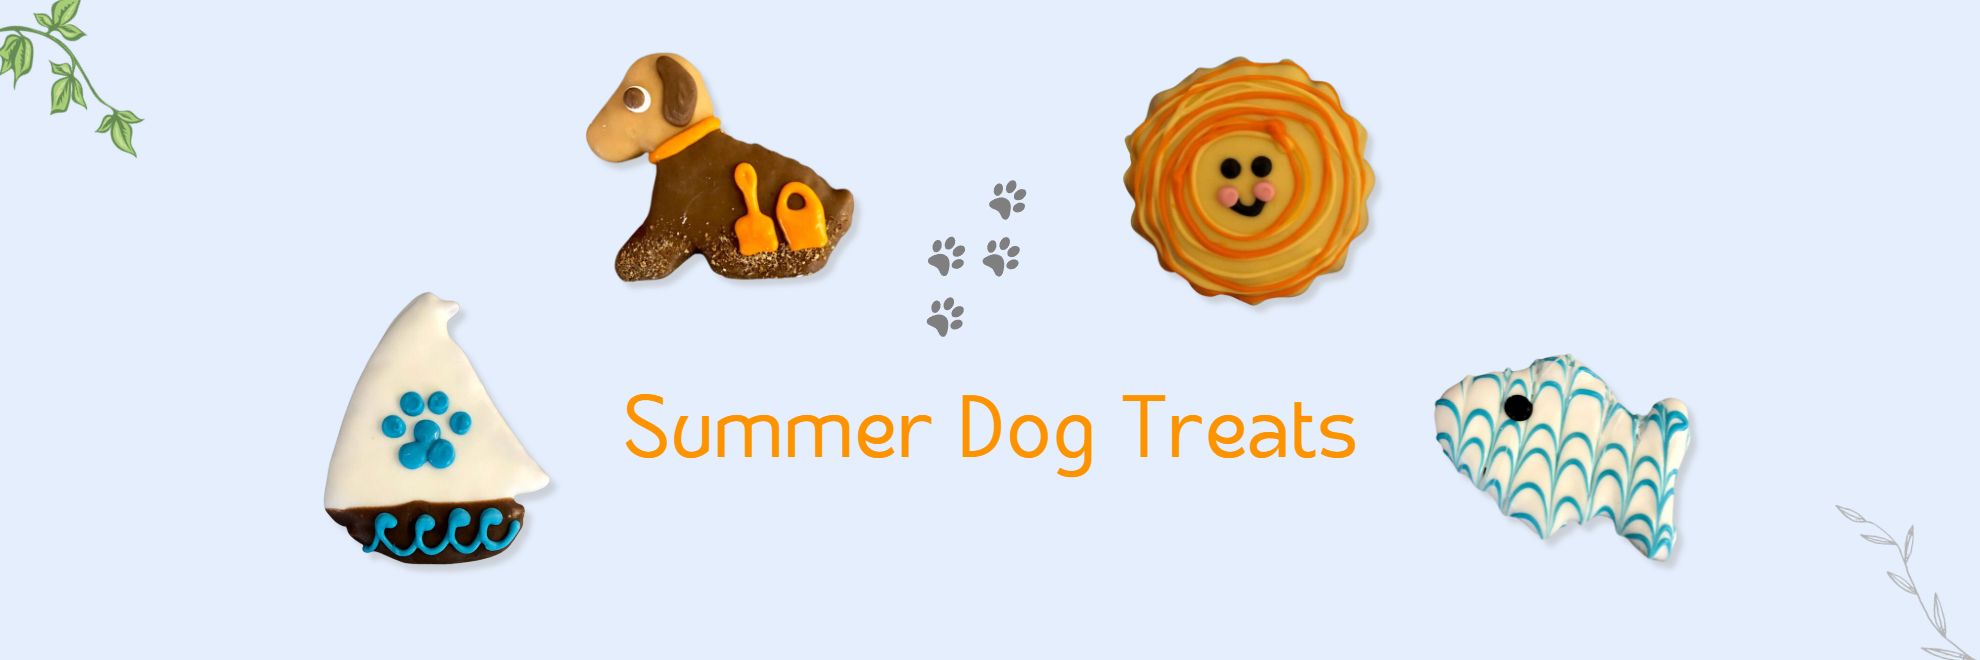 Summer Dog Treats